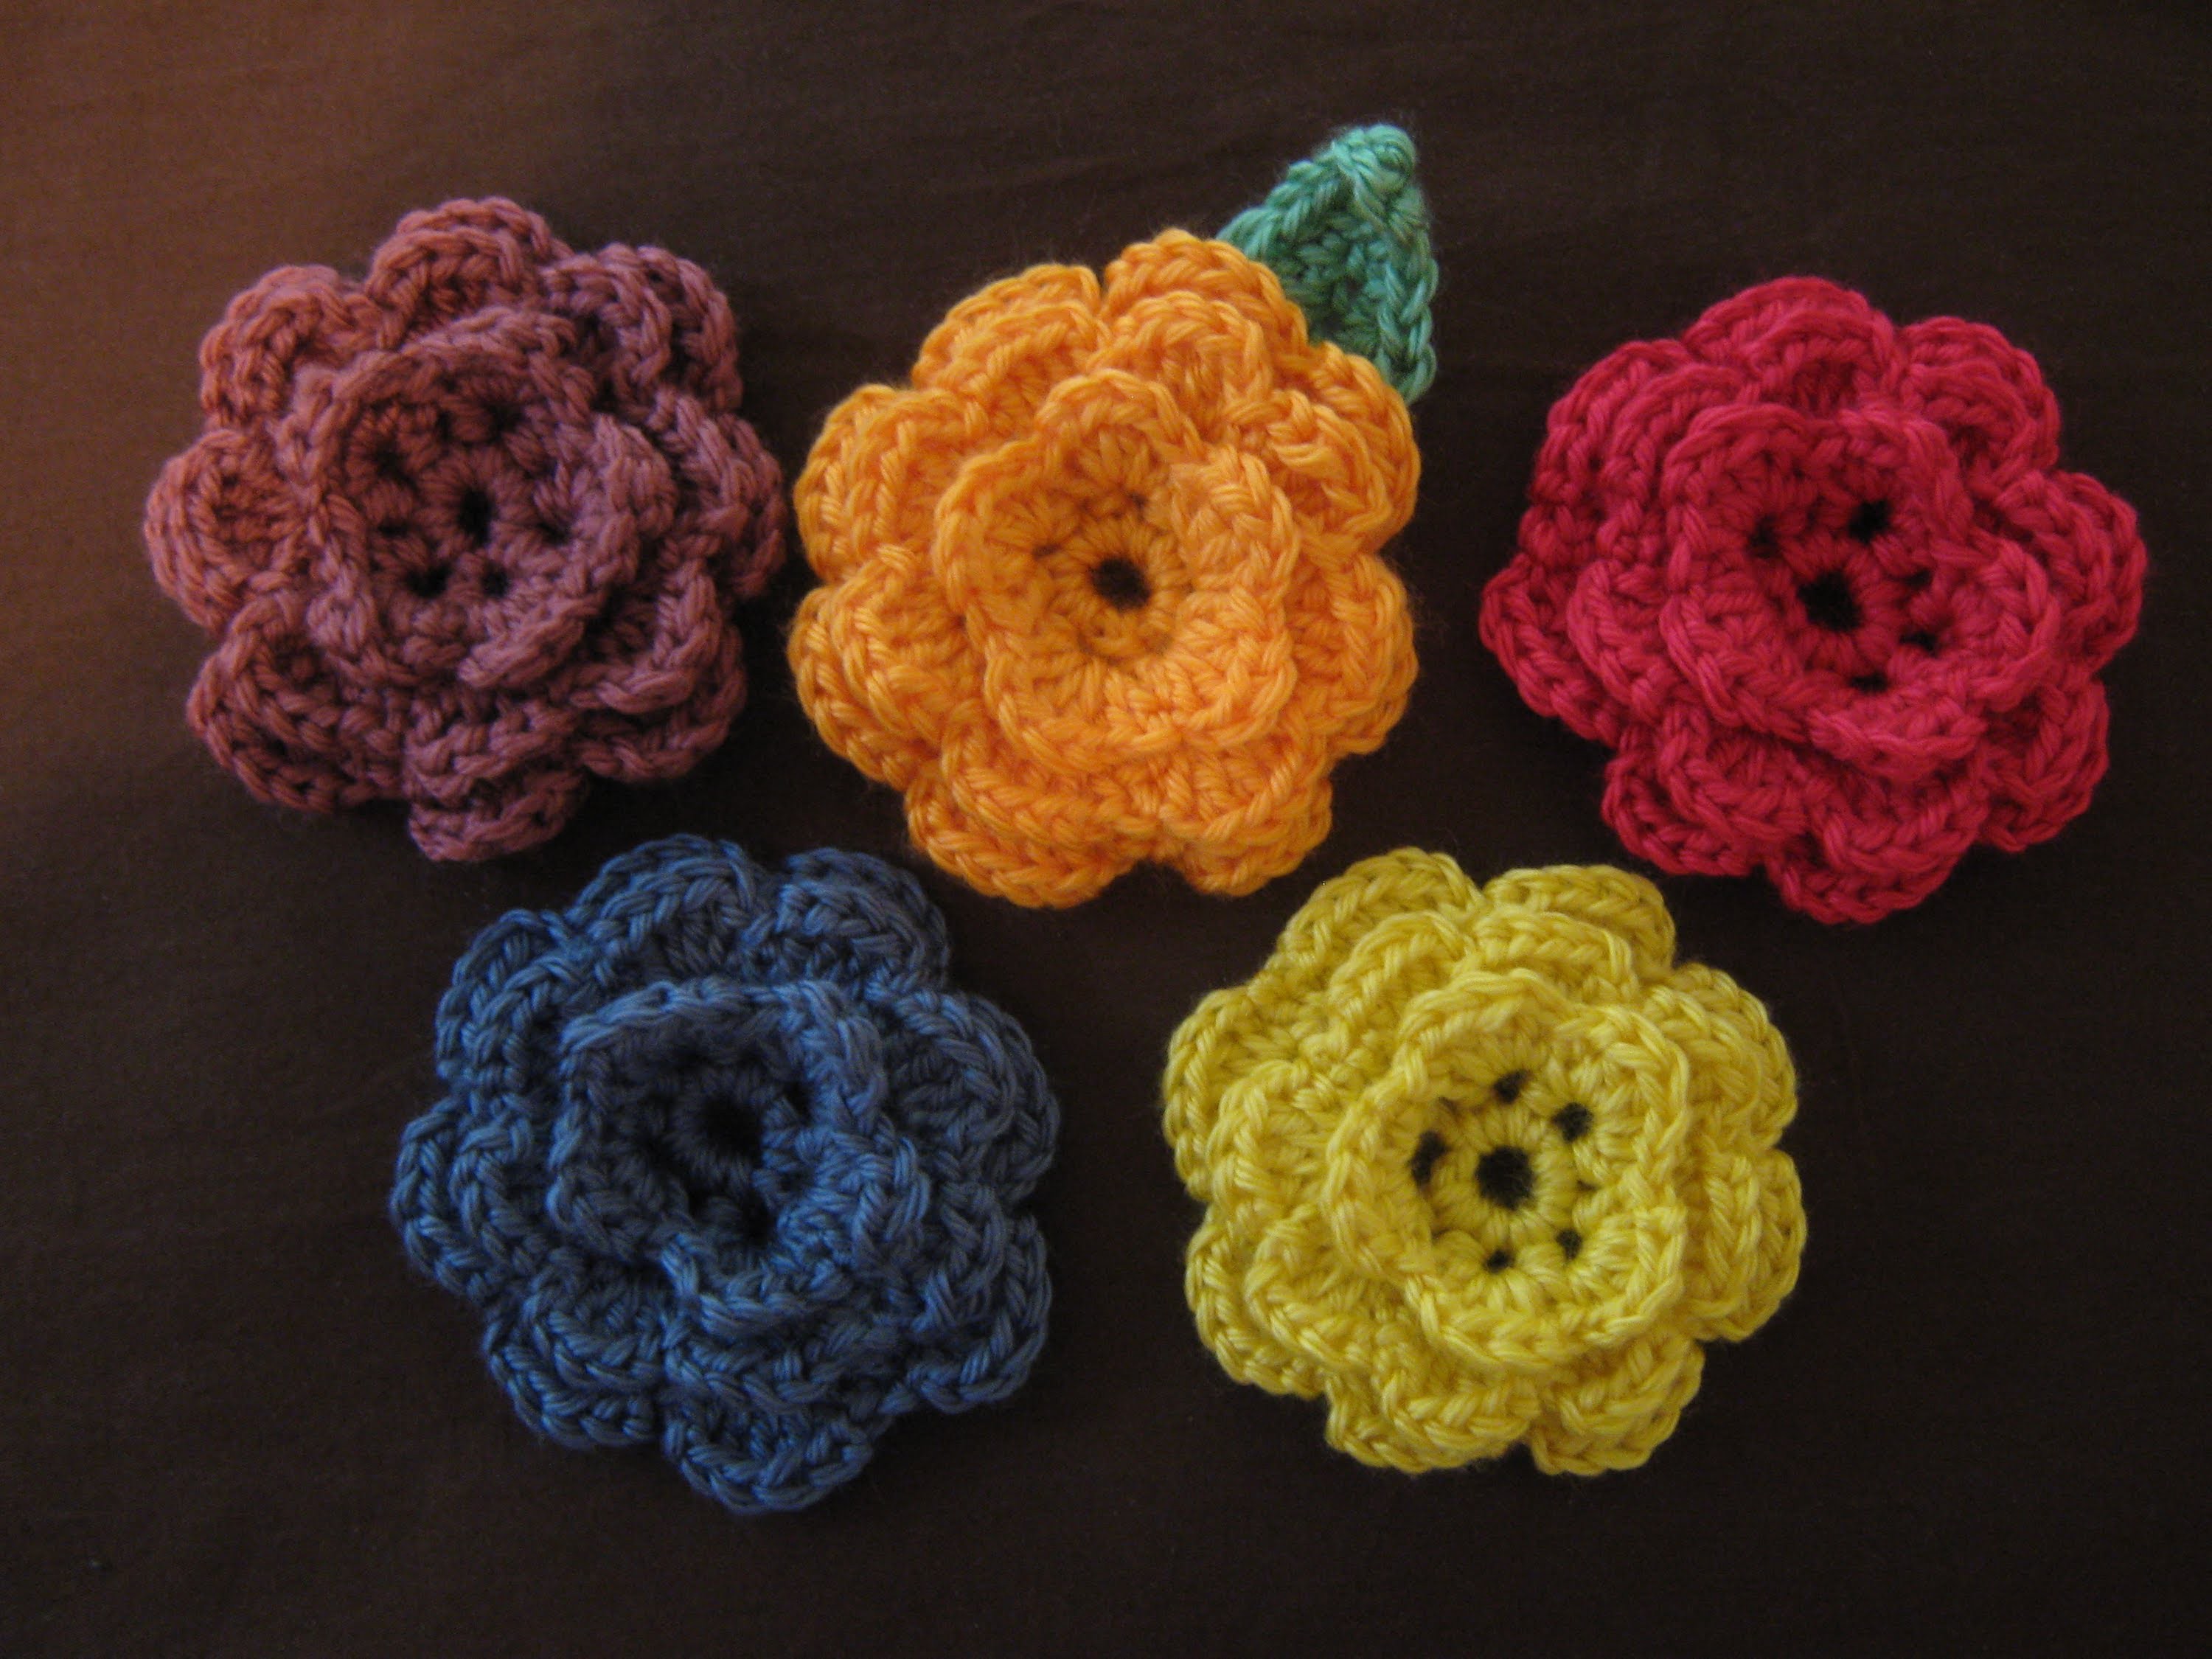 How to crochet a flower, part 1